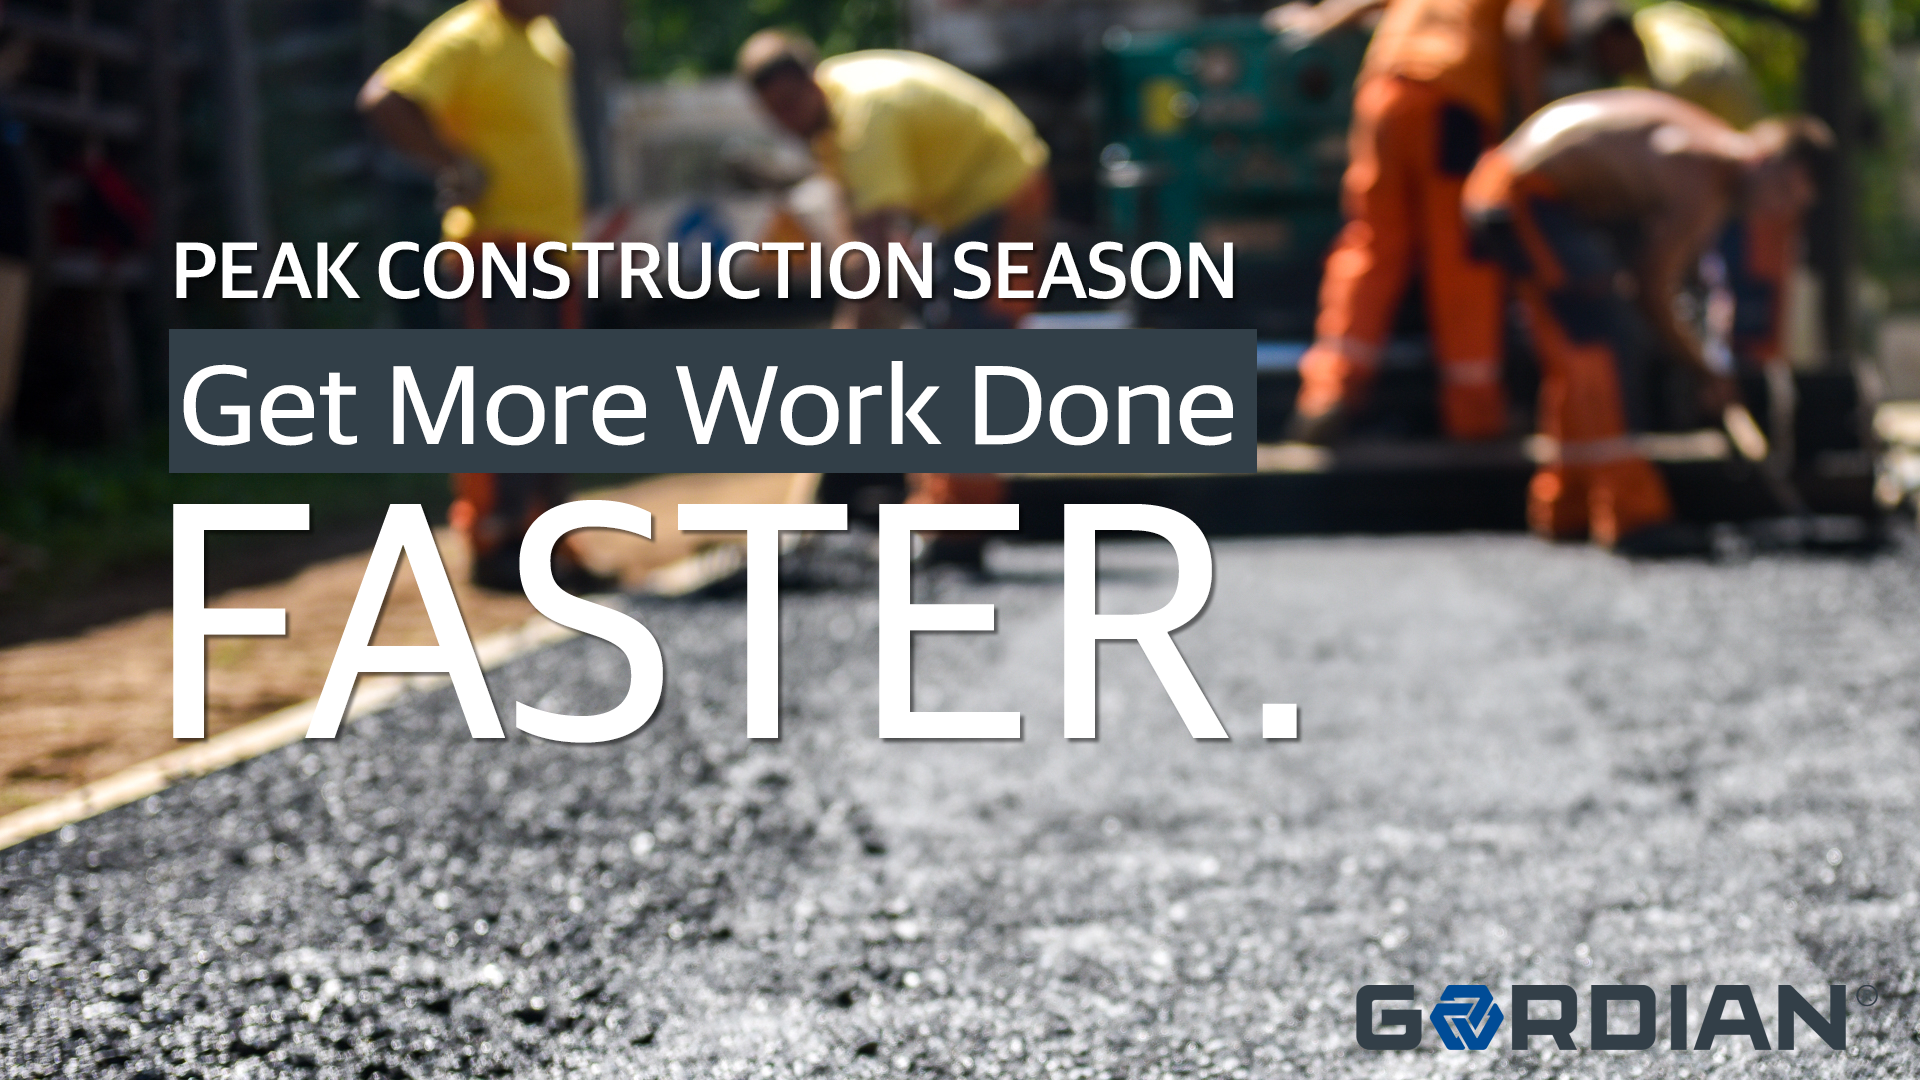 Peak Construction Season: Get More Work Done, Faster